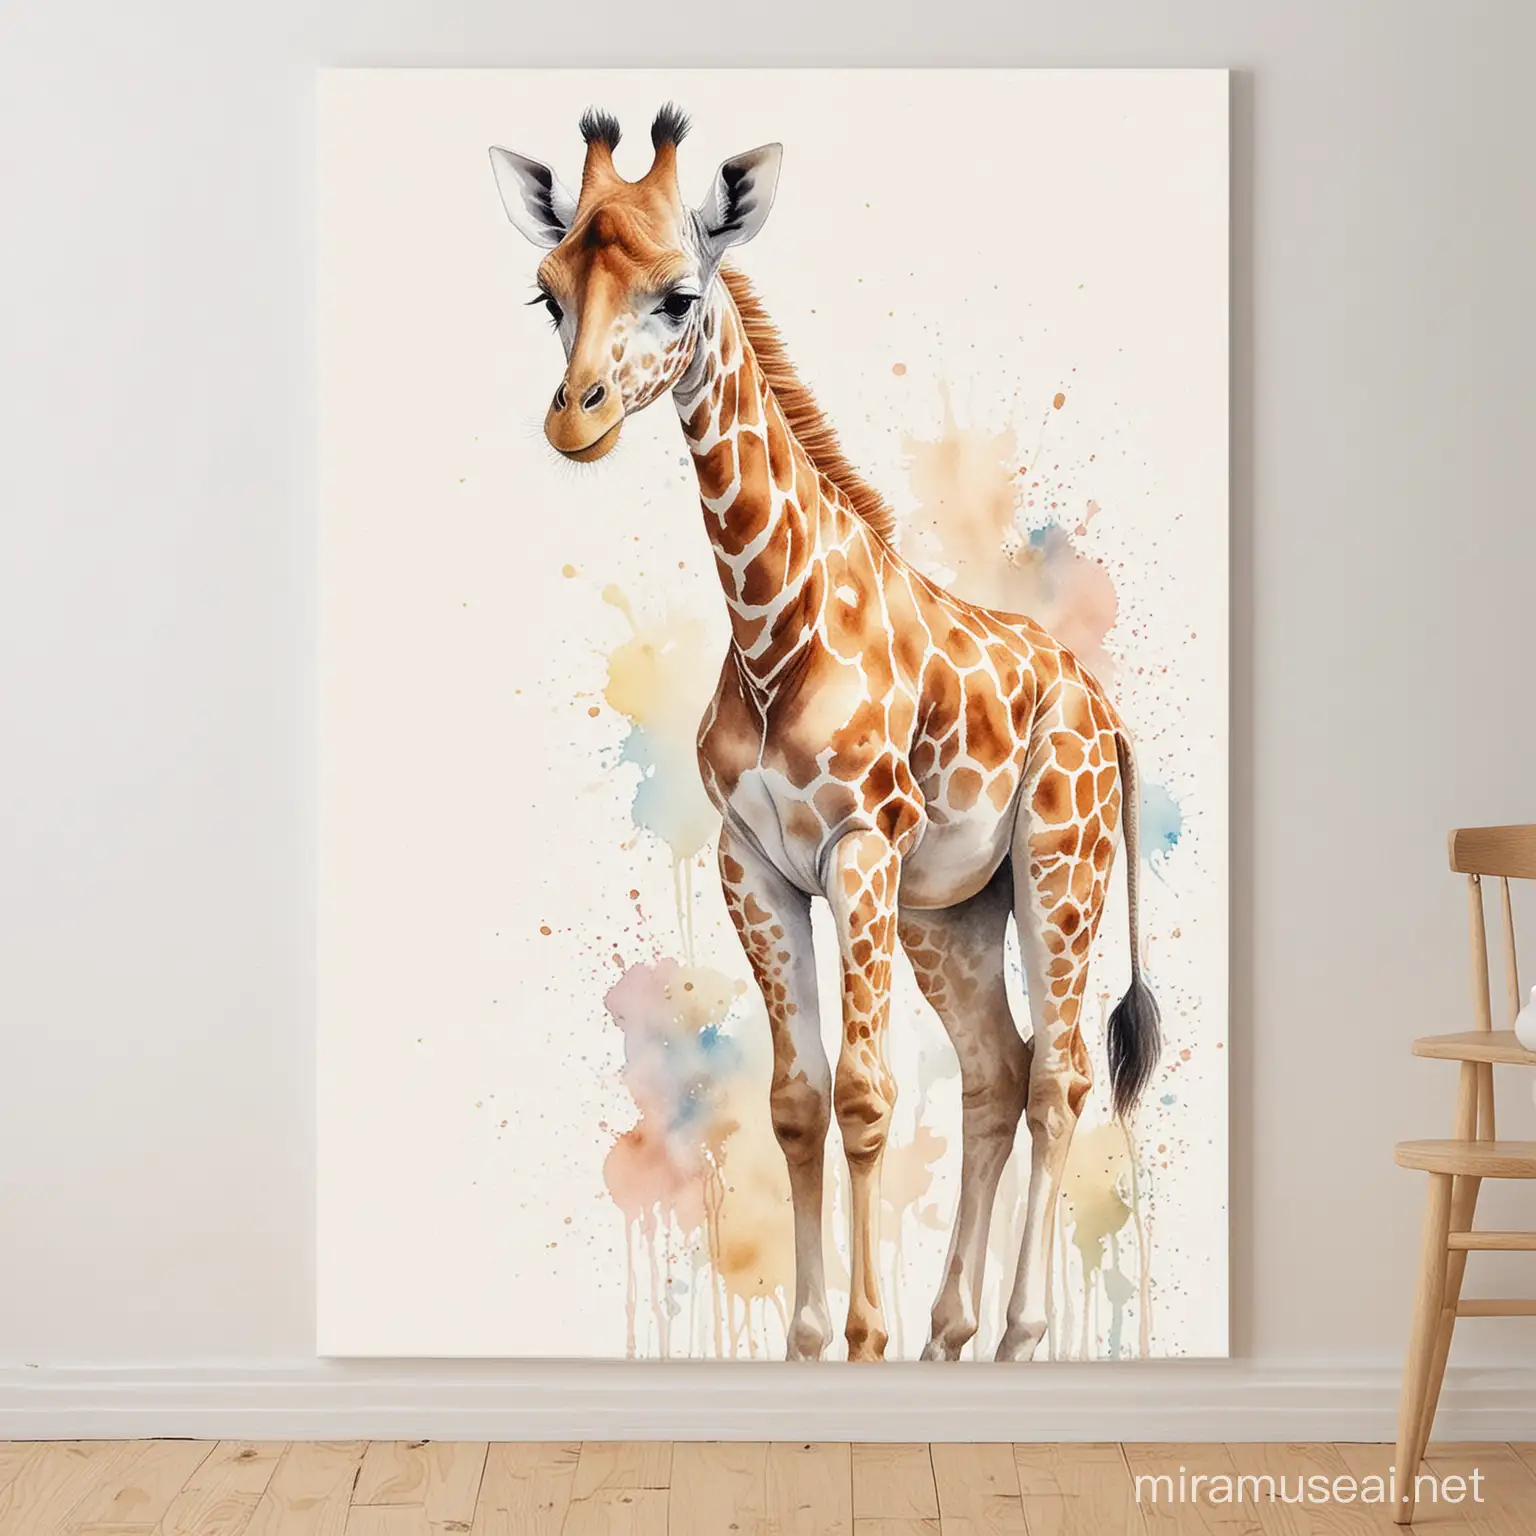 Adorable Baby Giraffe in Serene Watercolor